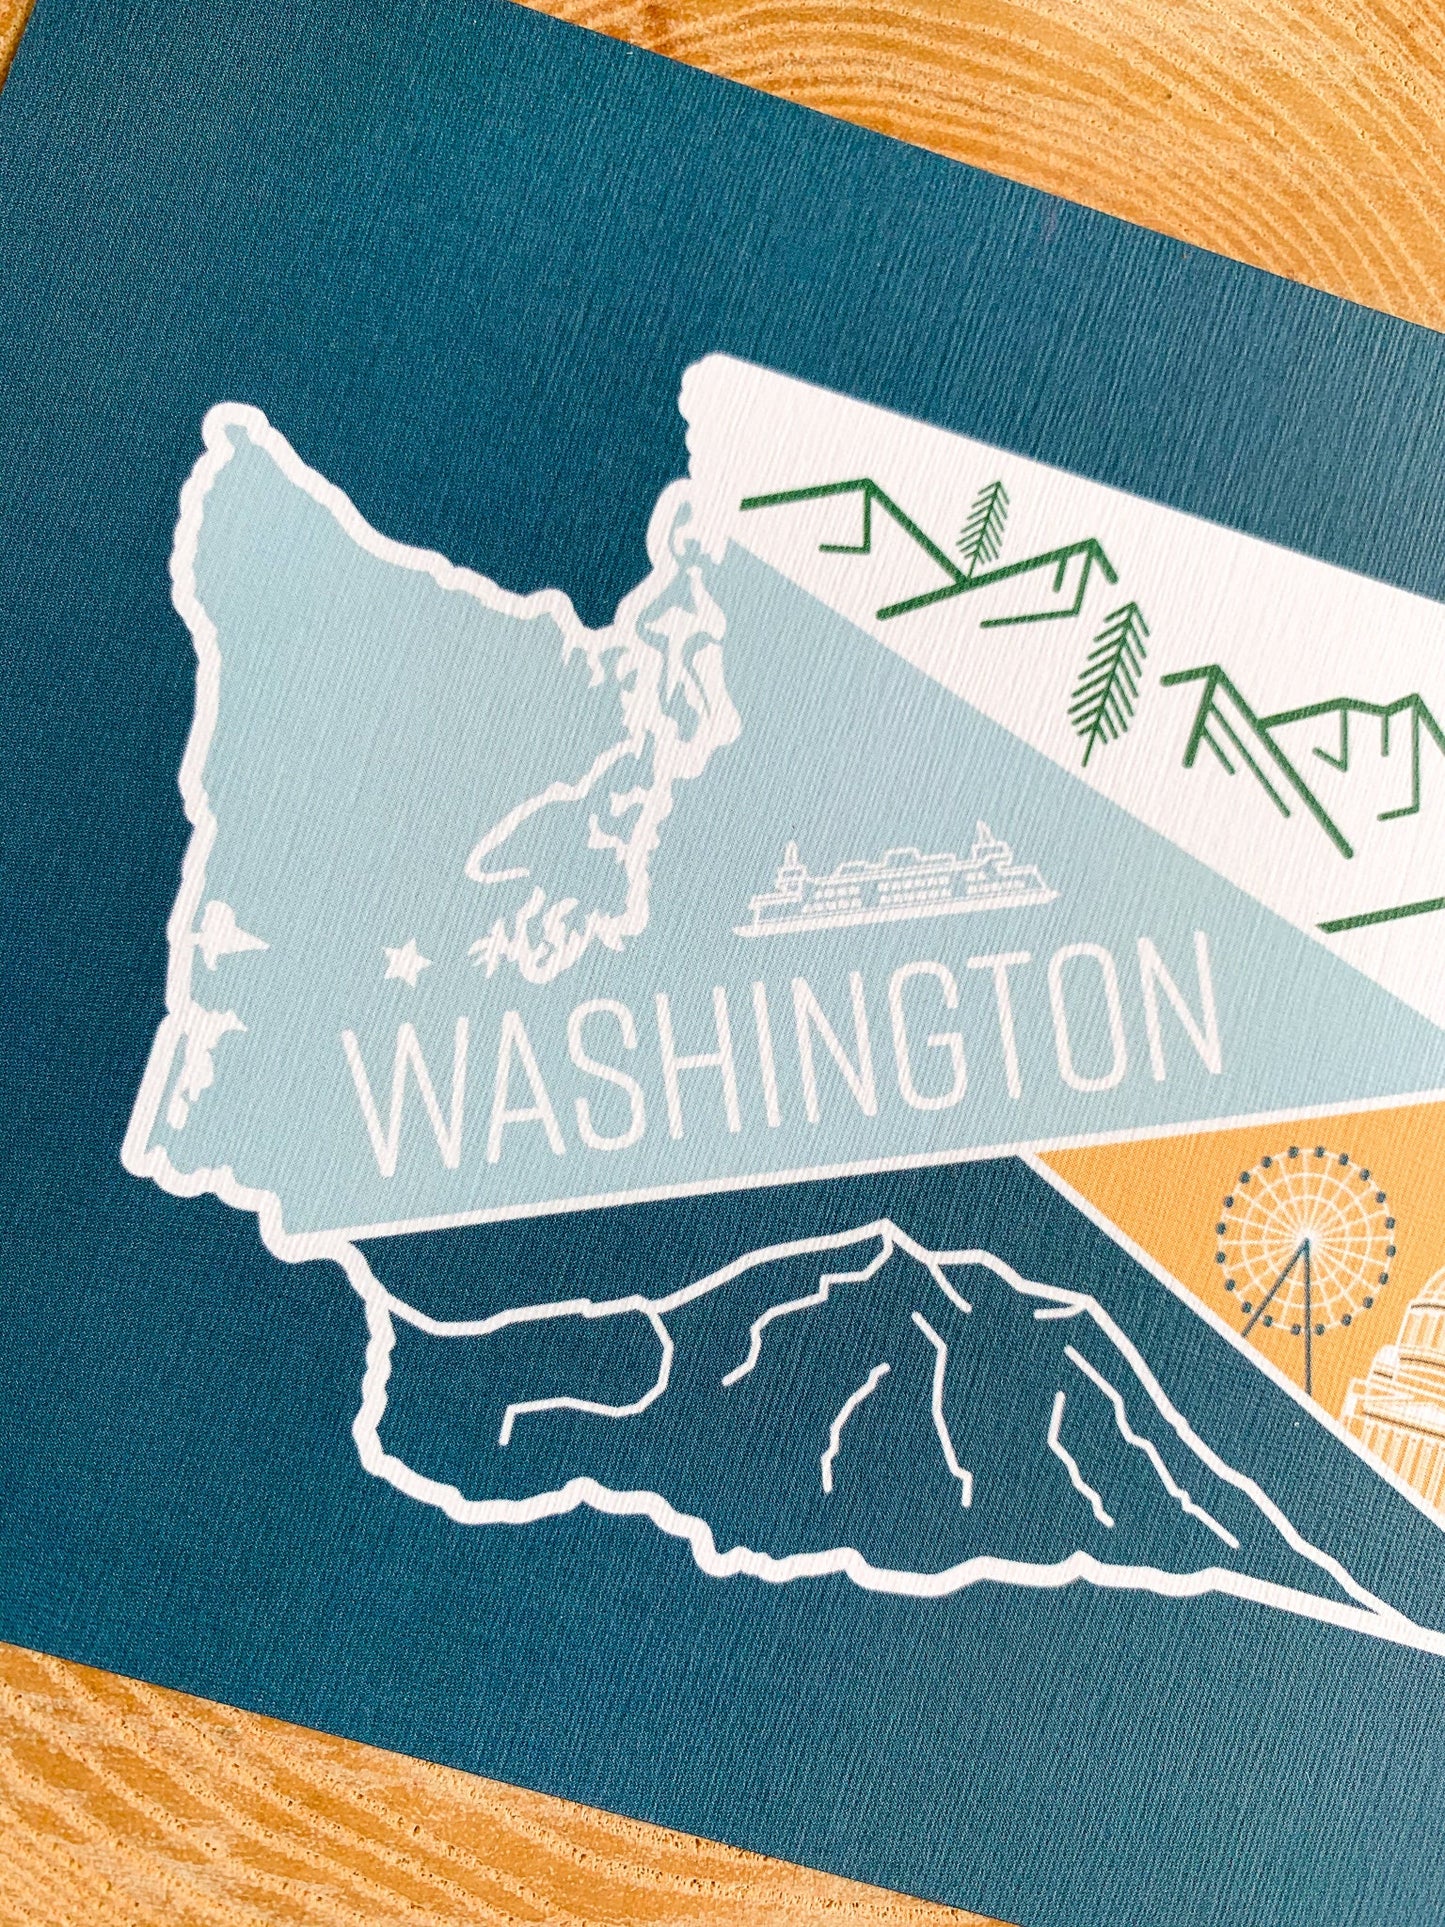 Washington State Postcard